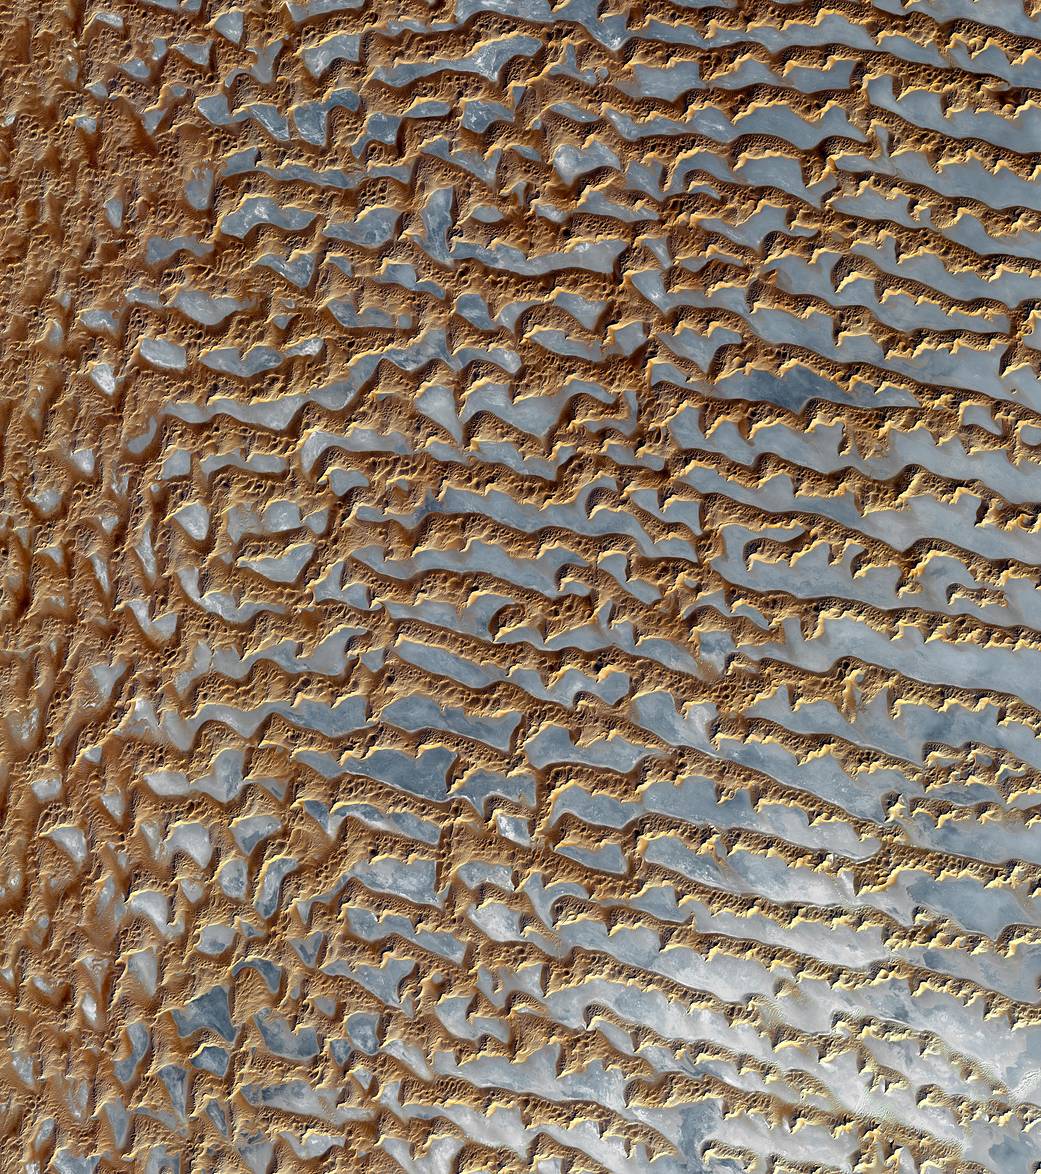 Wavy sand dunes in the desert